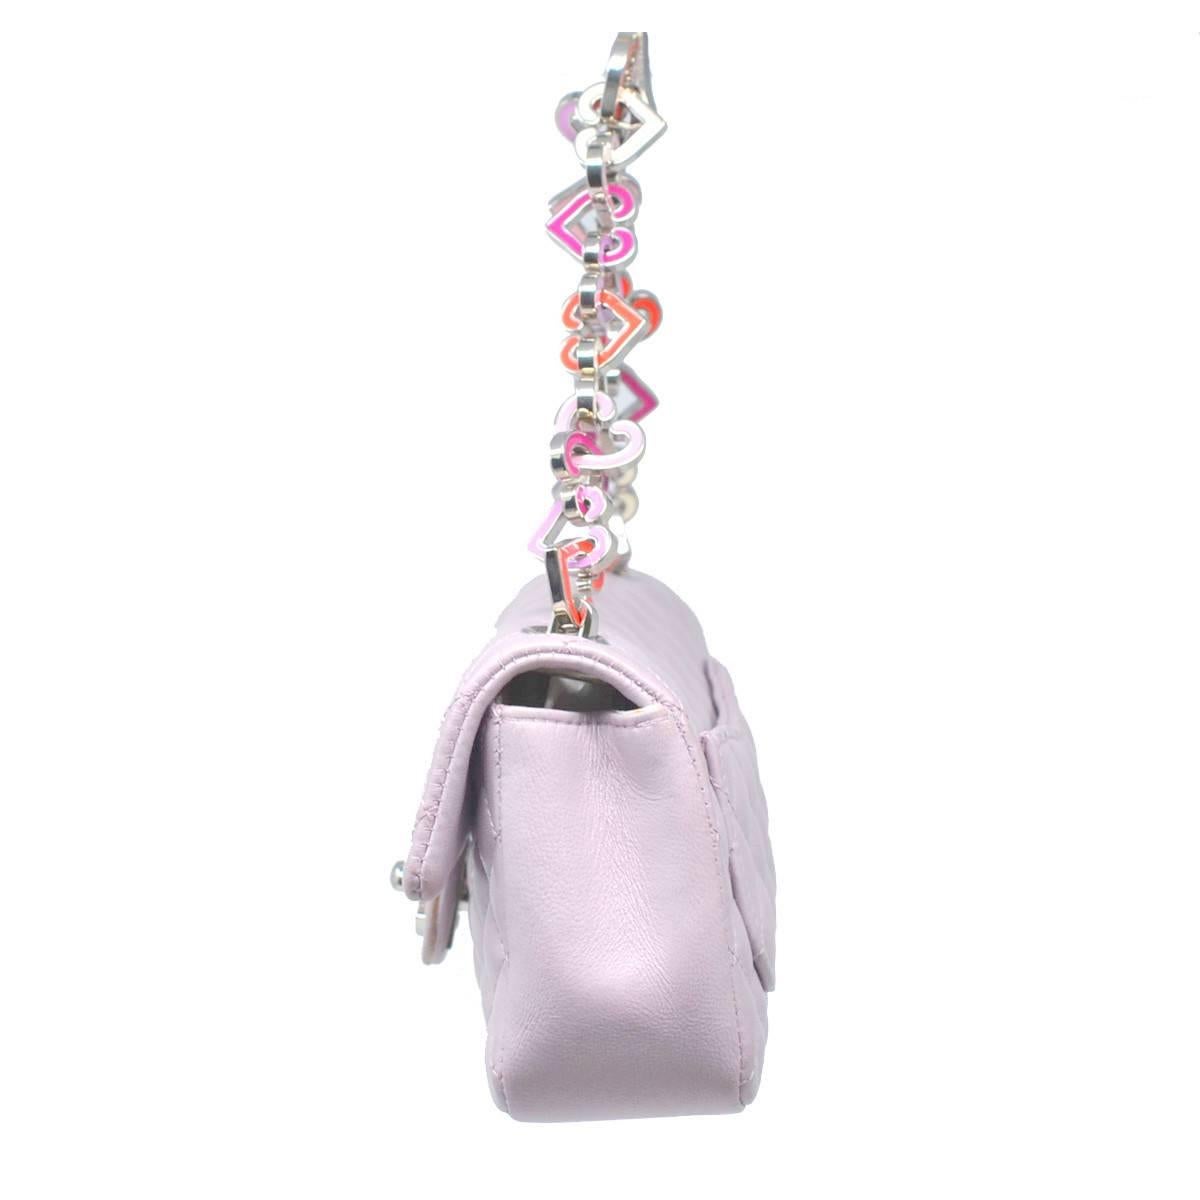 Company-Chanel
Model-Mini Valentine Lilac Handbag
Color-Lilac ( purple)
Date Code-8839471
Material-Leather
Measurements-6